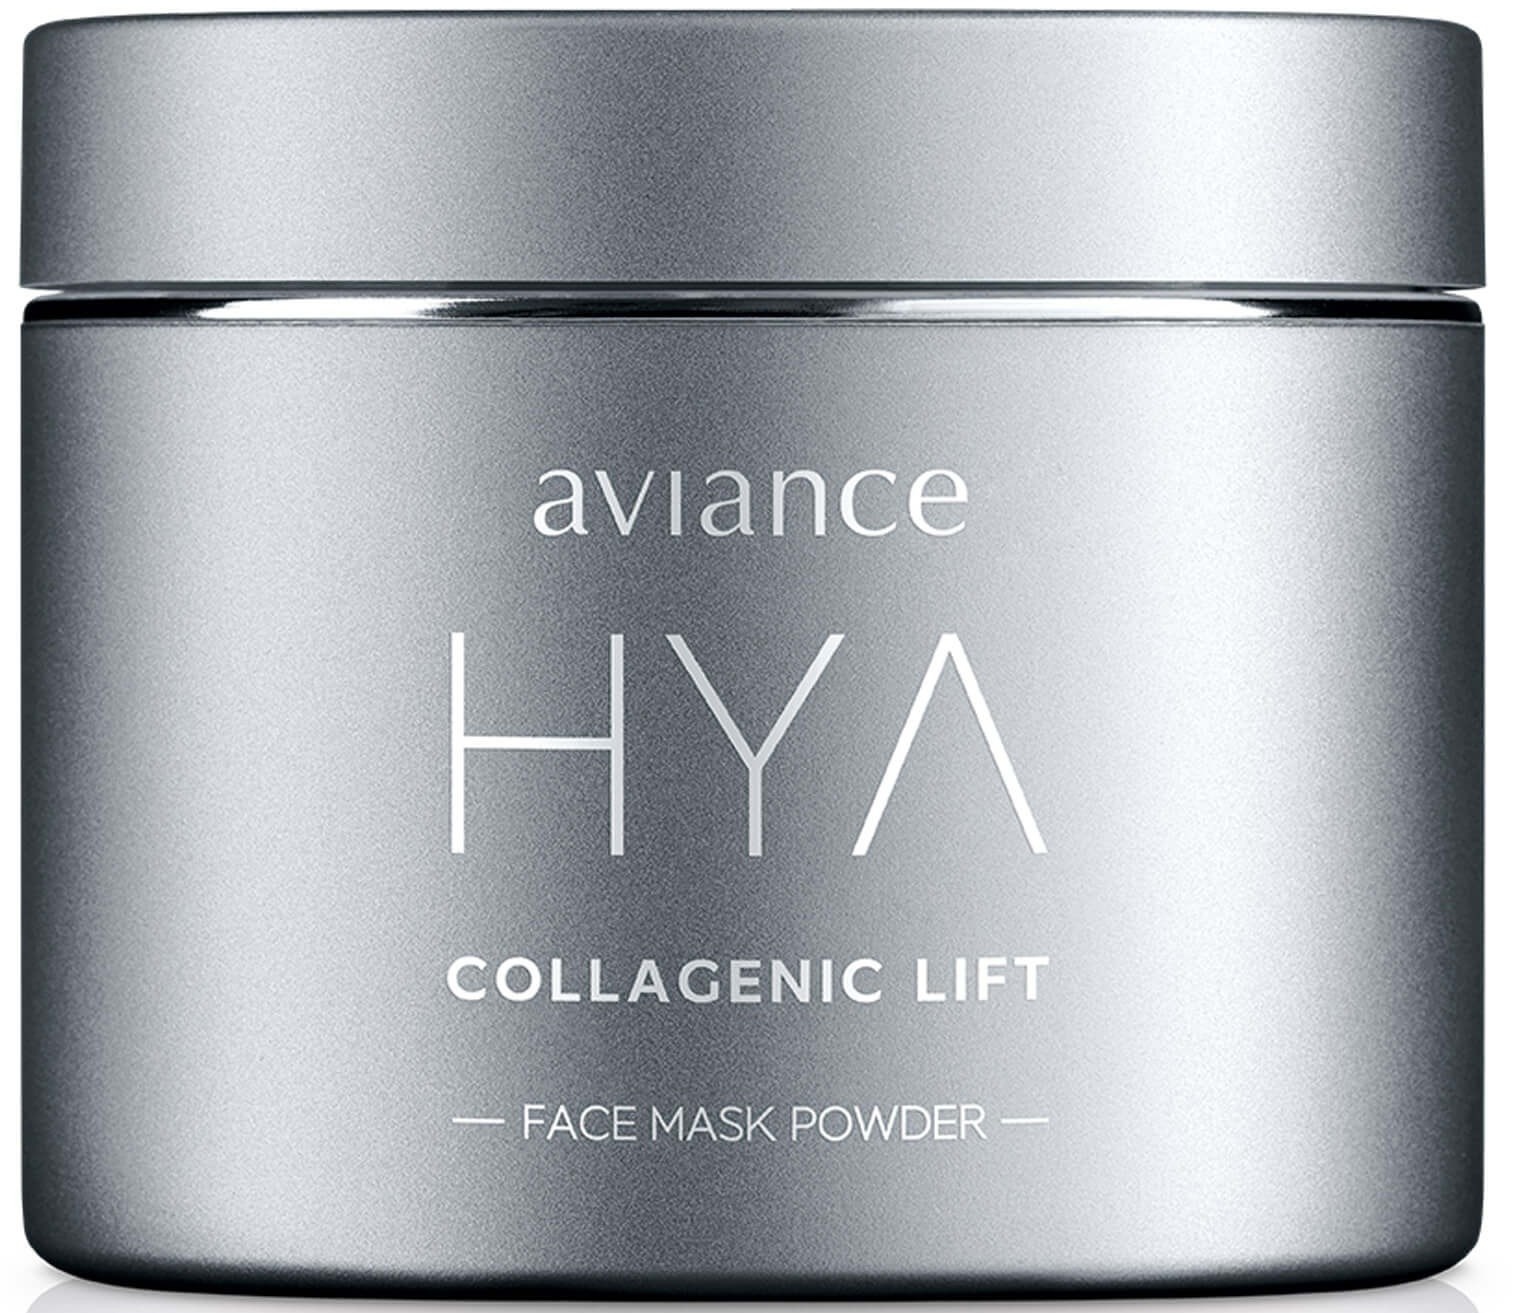 aviance Hya Collagenic Face Mask Powder